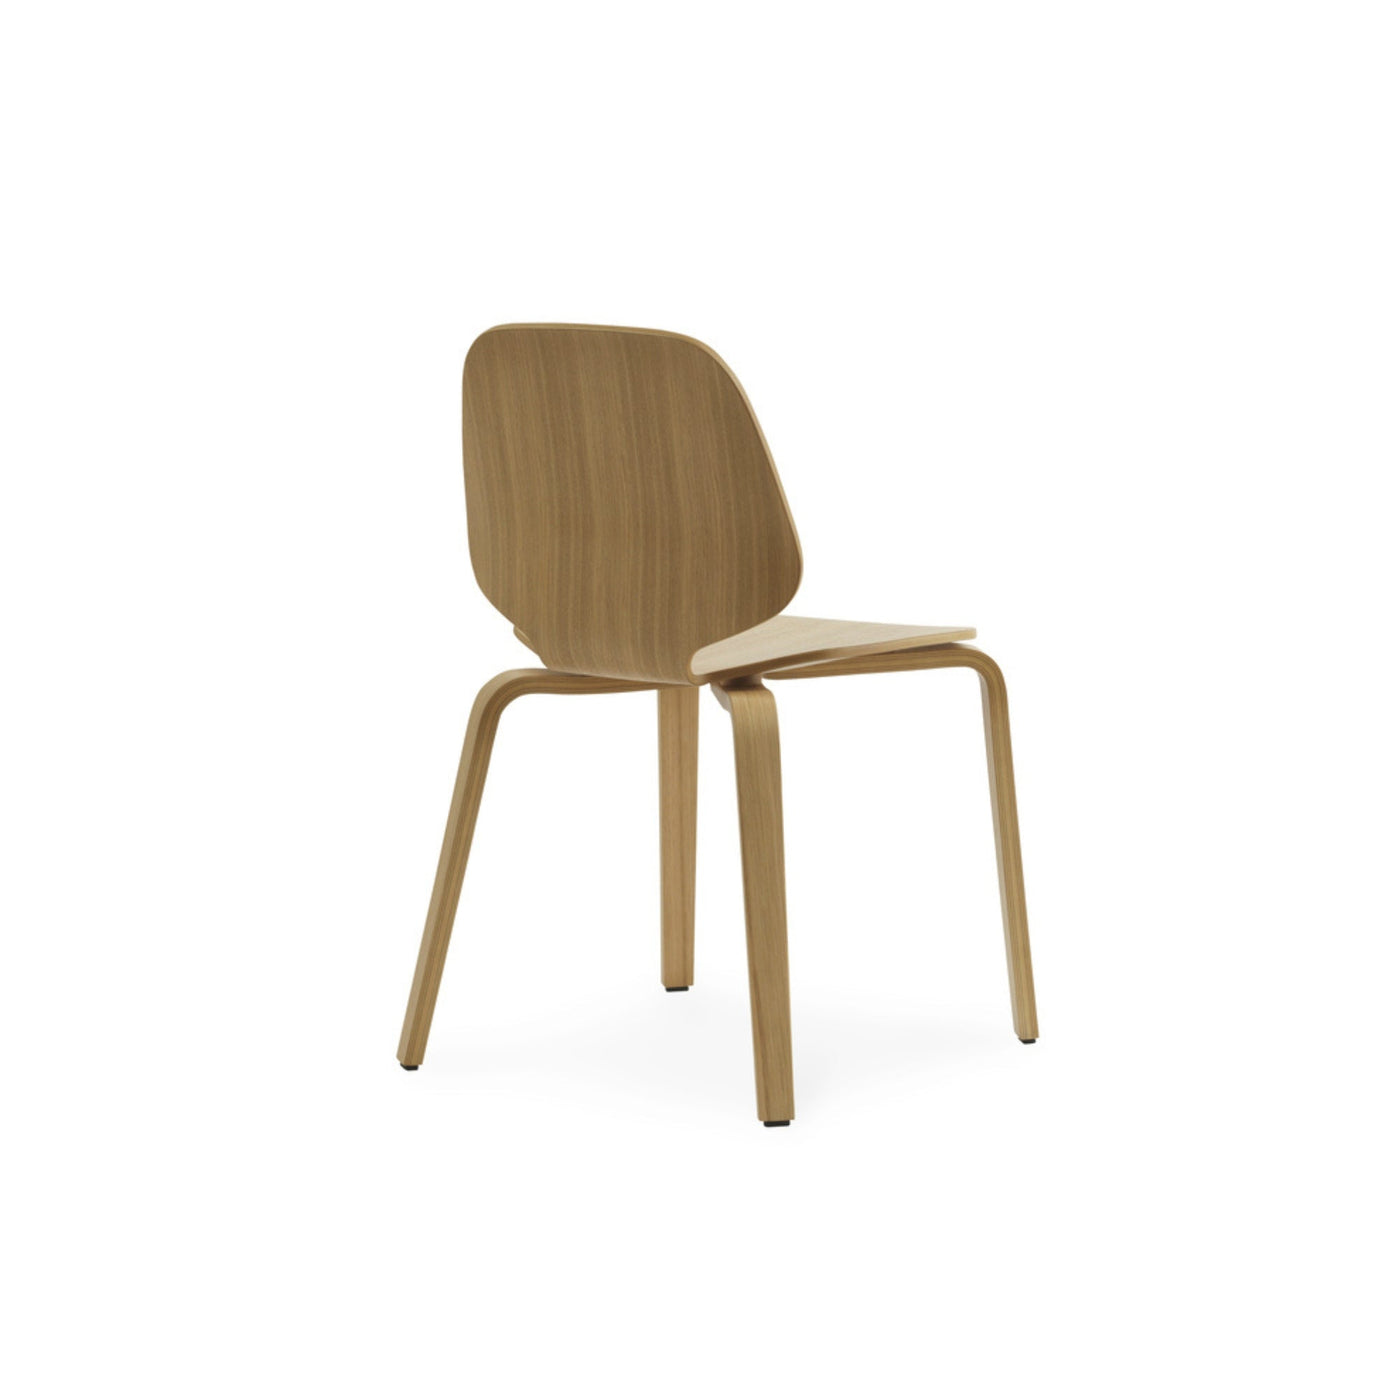 Normann Copenhagen My Chair Steel at someday designs. #colour_oak